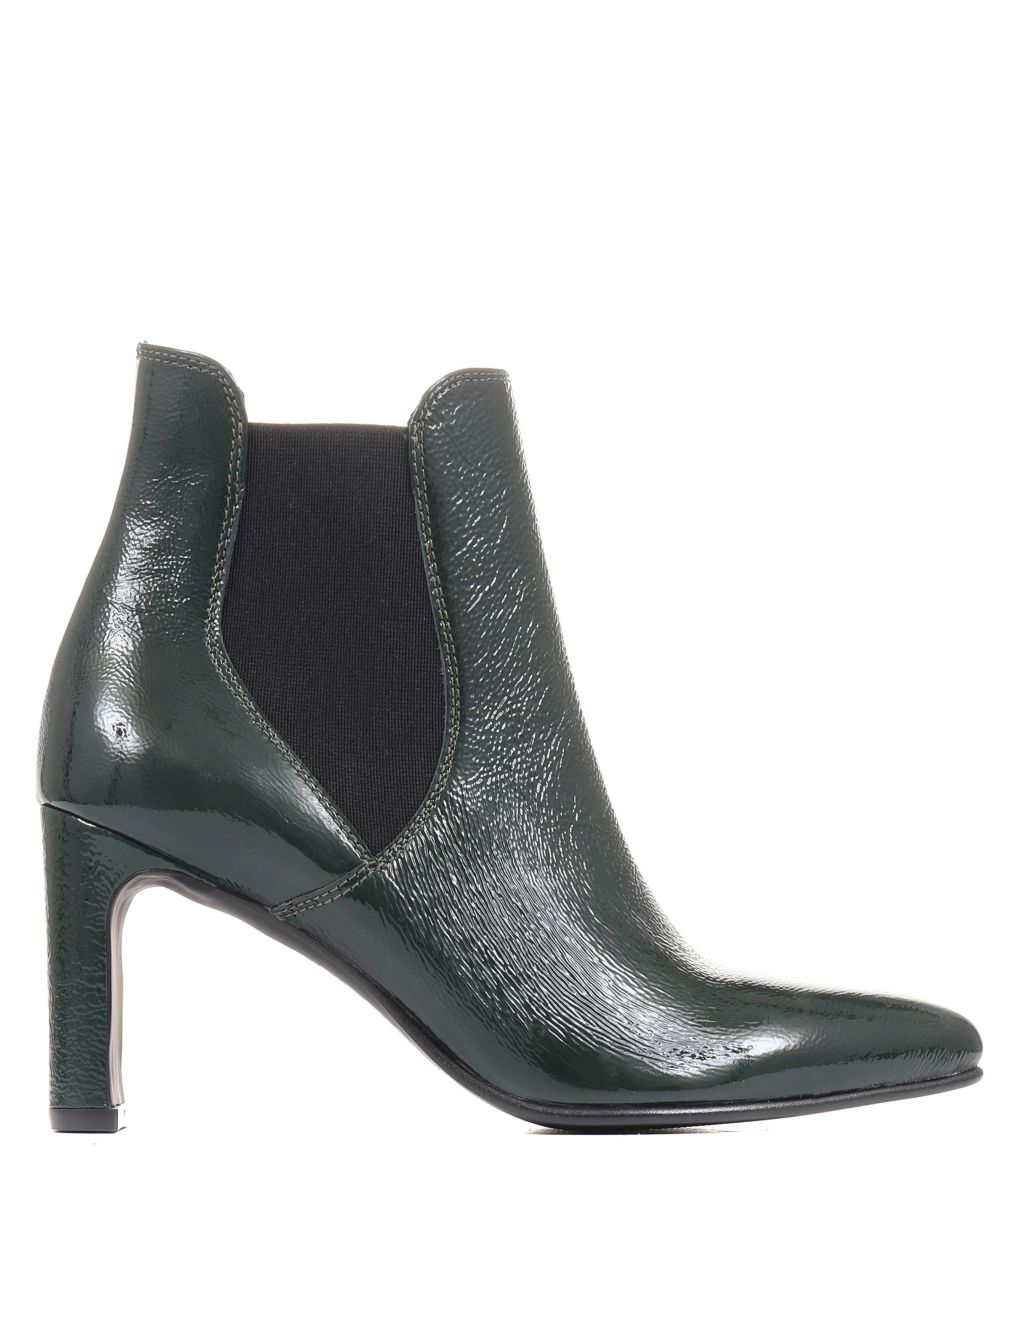 Leather Patent Chelsea Block Heel Boots image 1